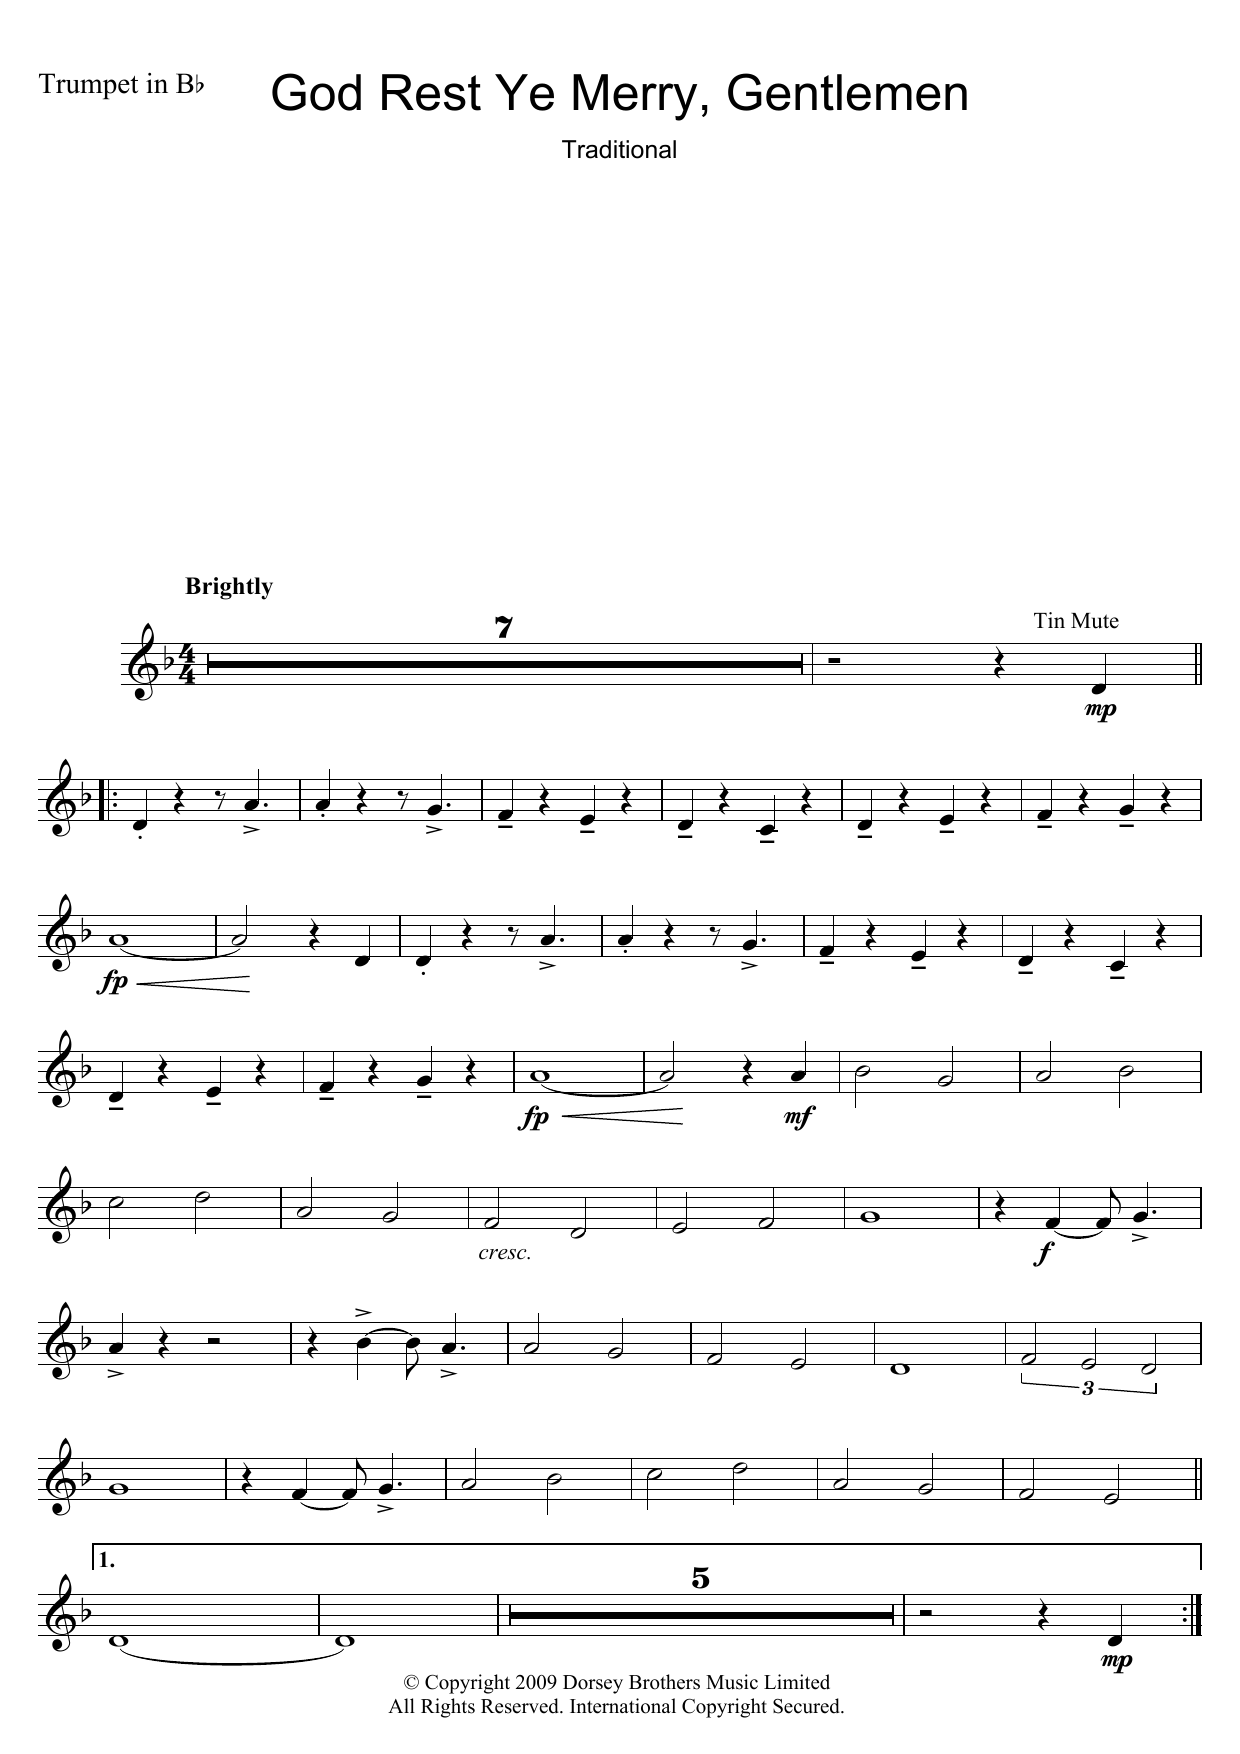 Christmas Carol God Rest Ye Merry, Gentlemen sheet music notes and chords. Download Printable PDF.